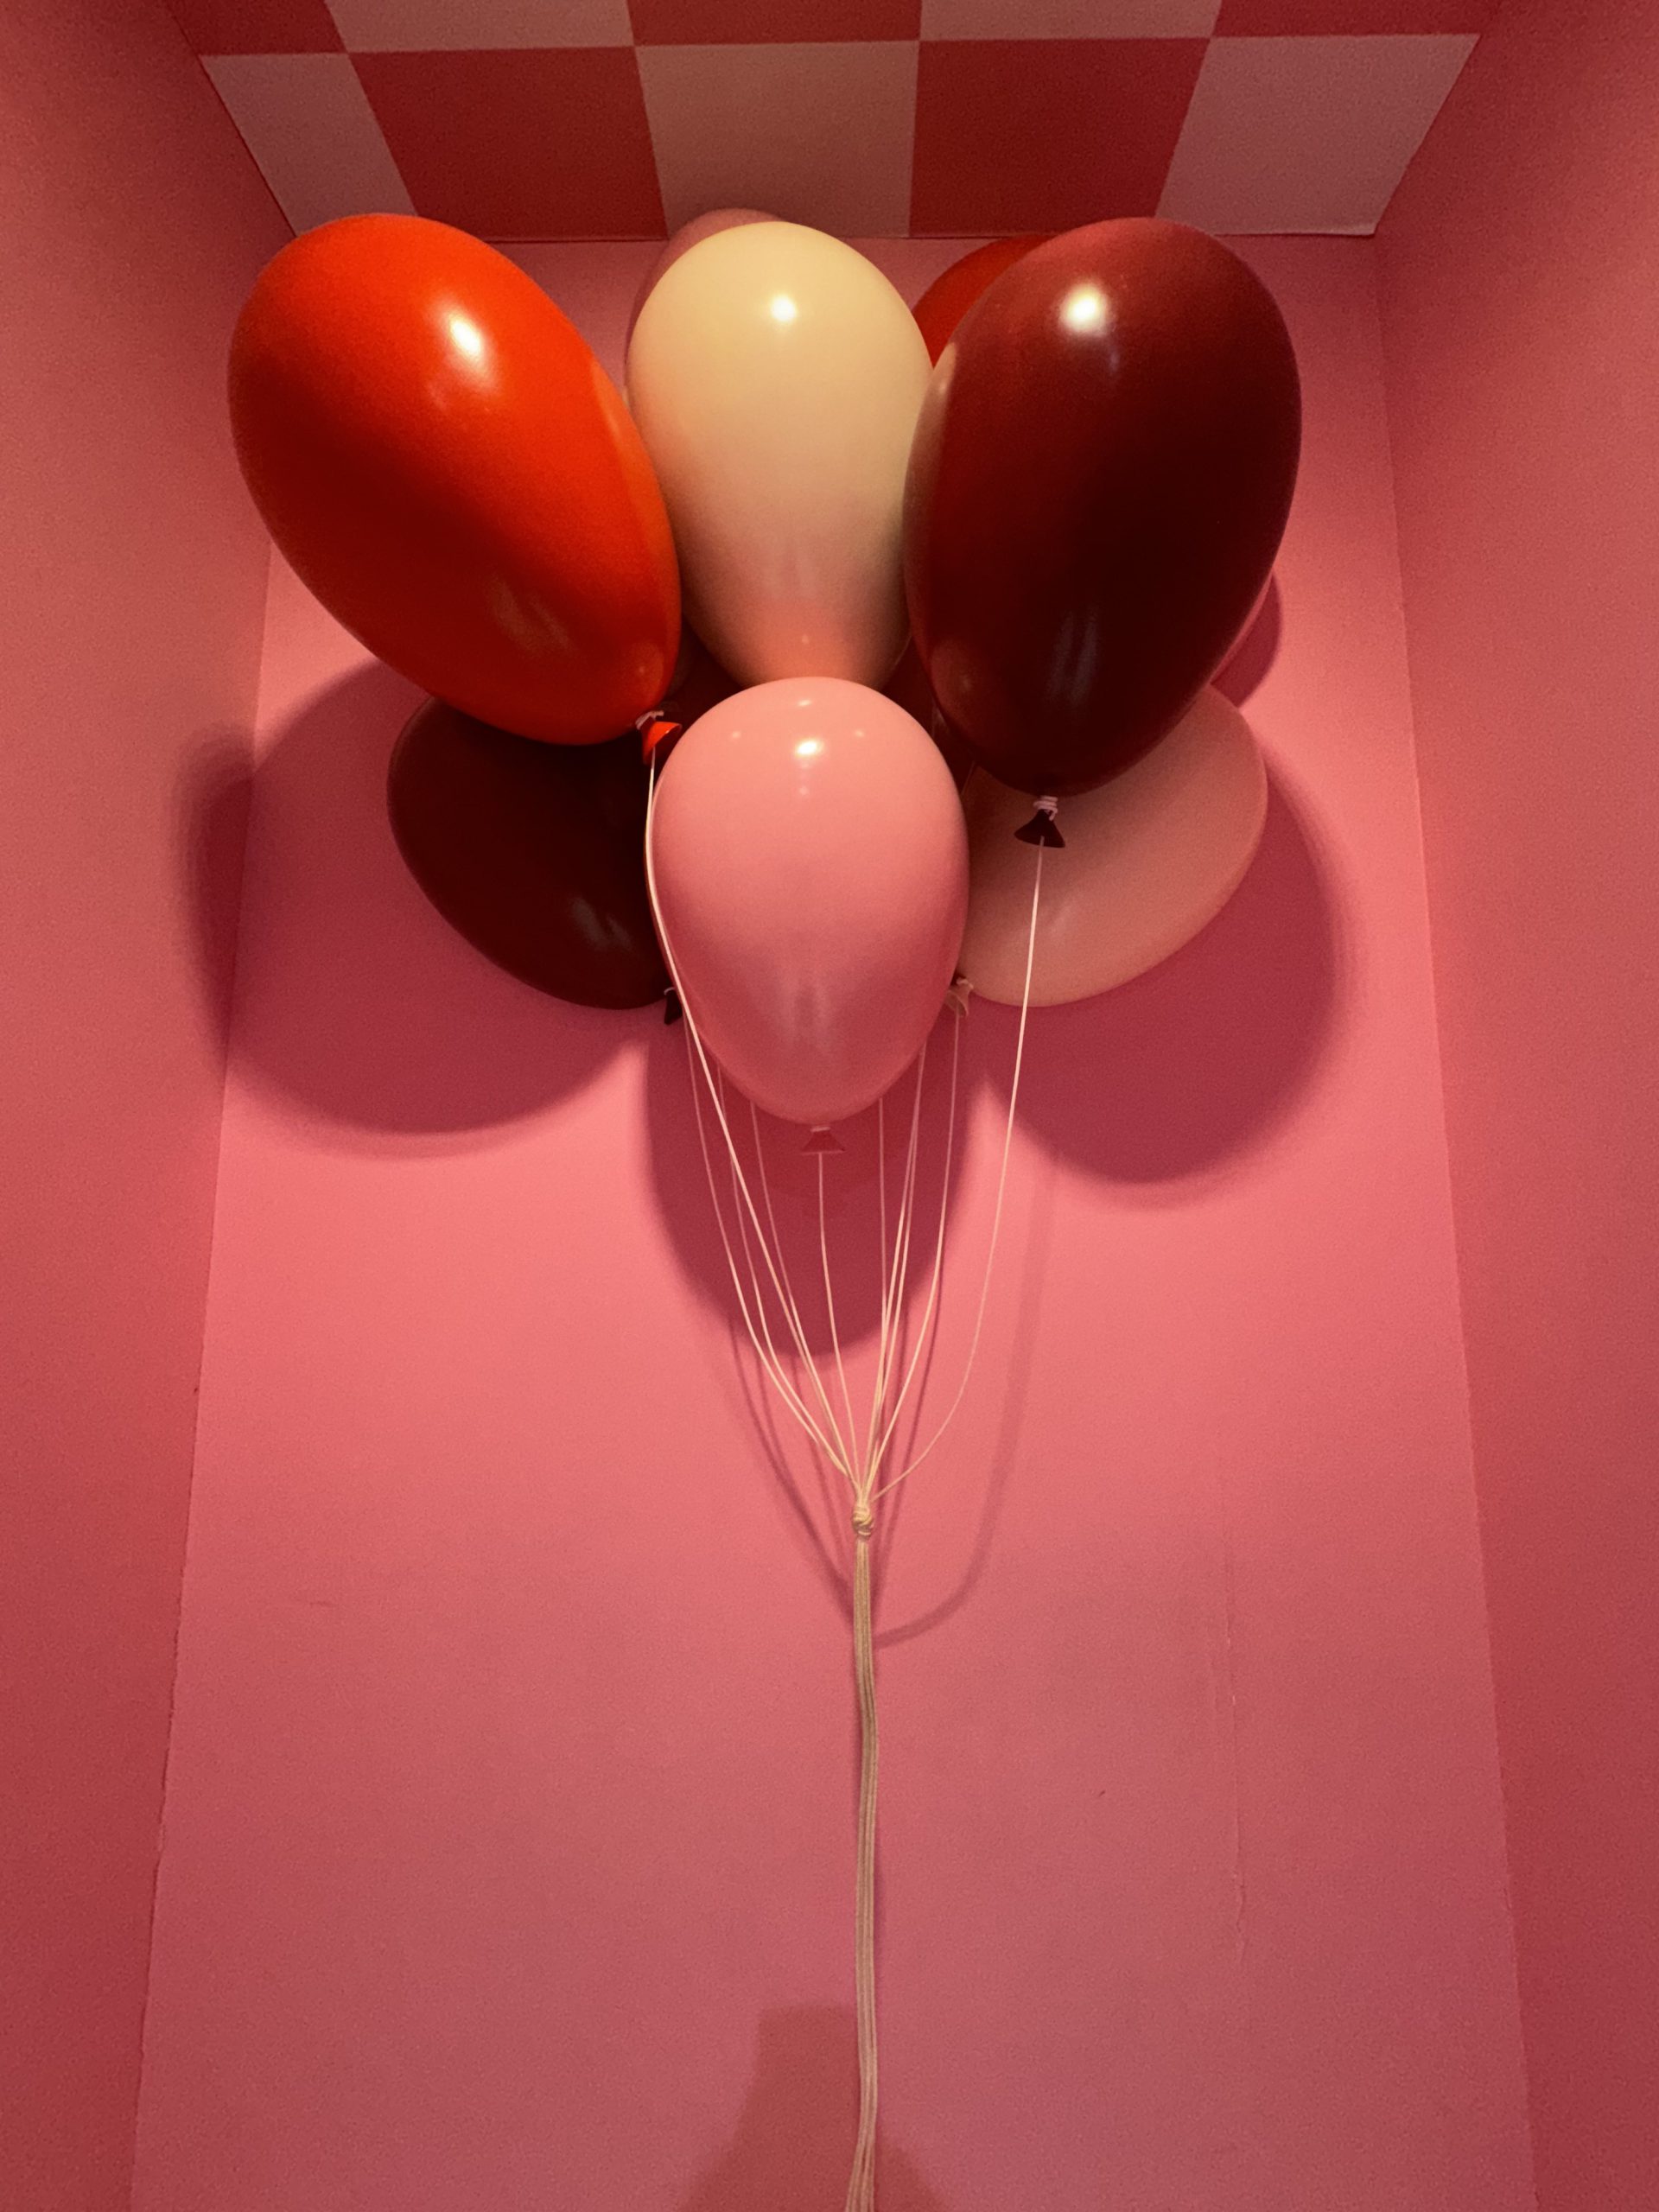 Balloon at Museum of Ice Cream